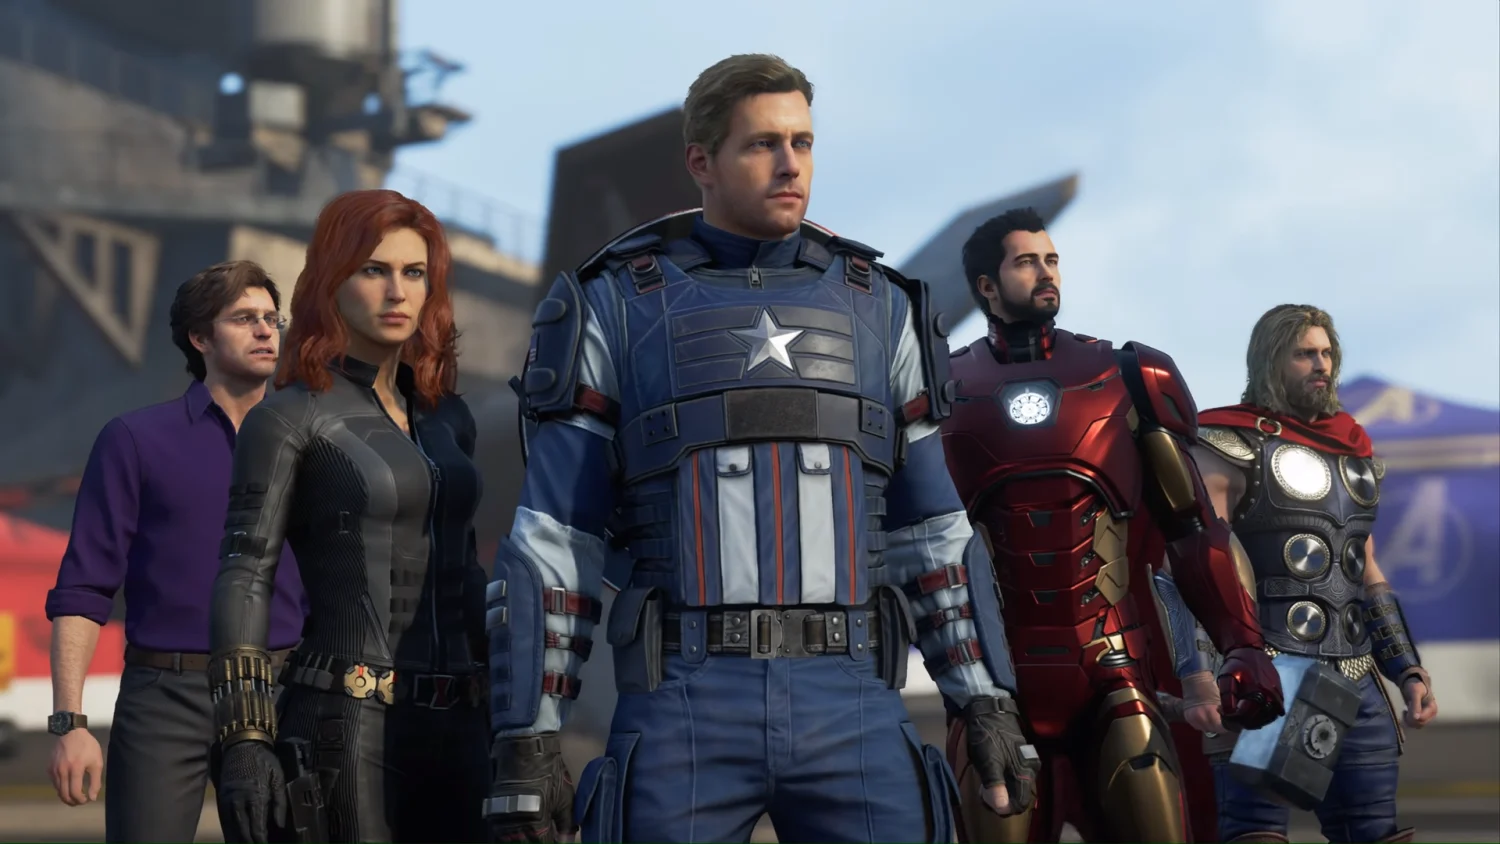 Jogo Marvel Avengers Xbox One